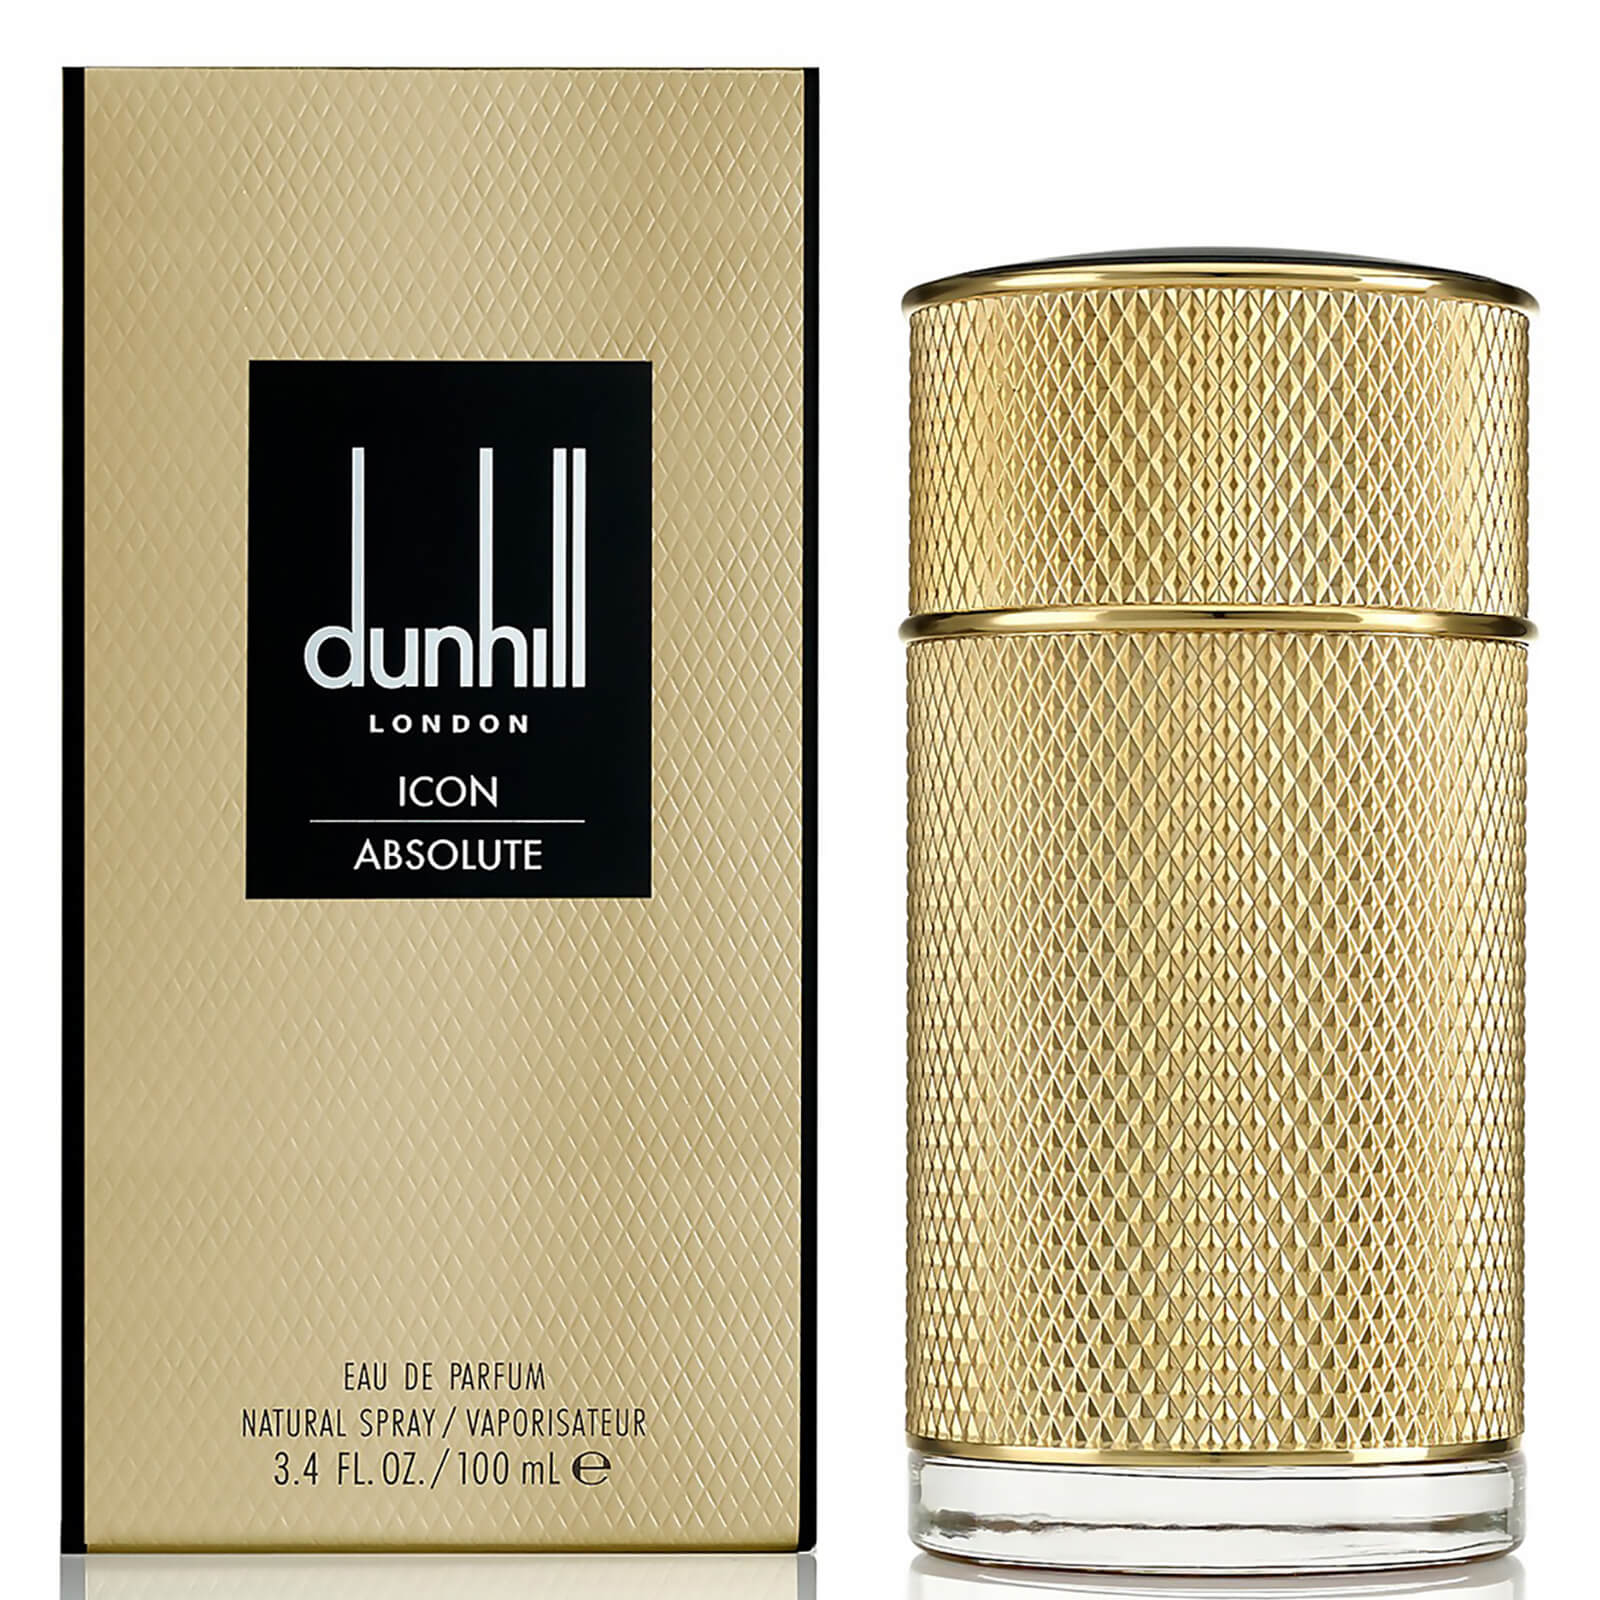 Image of dunhill London Icon Absolute Eau de Parfum Profumo Spray 100ml